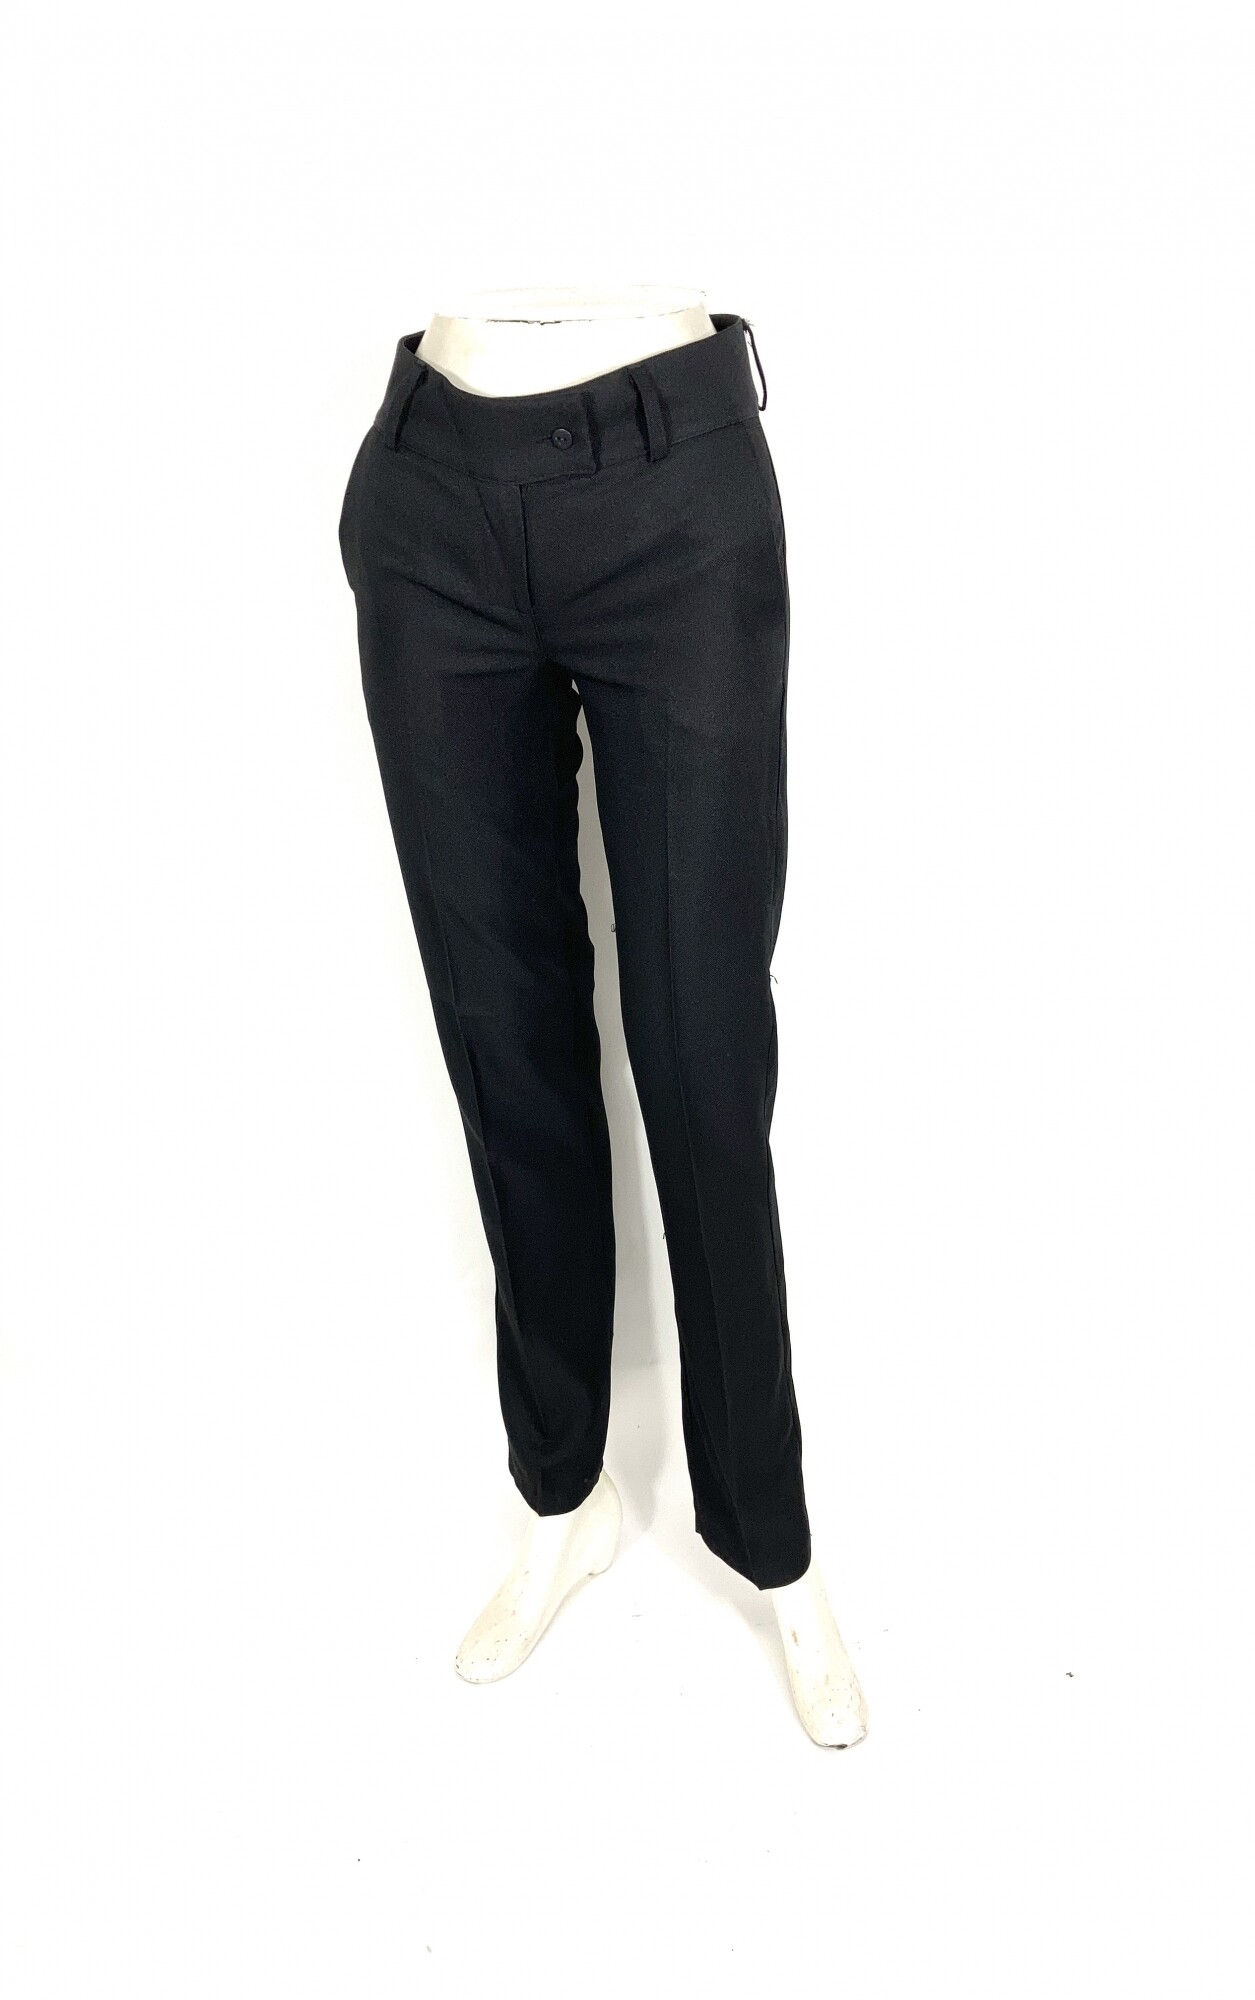 https://f.fcdn.app/imgs/09f189/www.losmuchachosmaldonado.com.uy/mumauy/f587/original/catalogo/PVDU_NEGROTM_1/2000-2000/pantalon-vestir-dama-uniforme-negro-tm.jpg